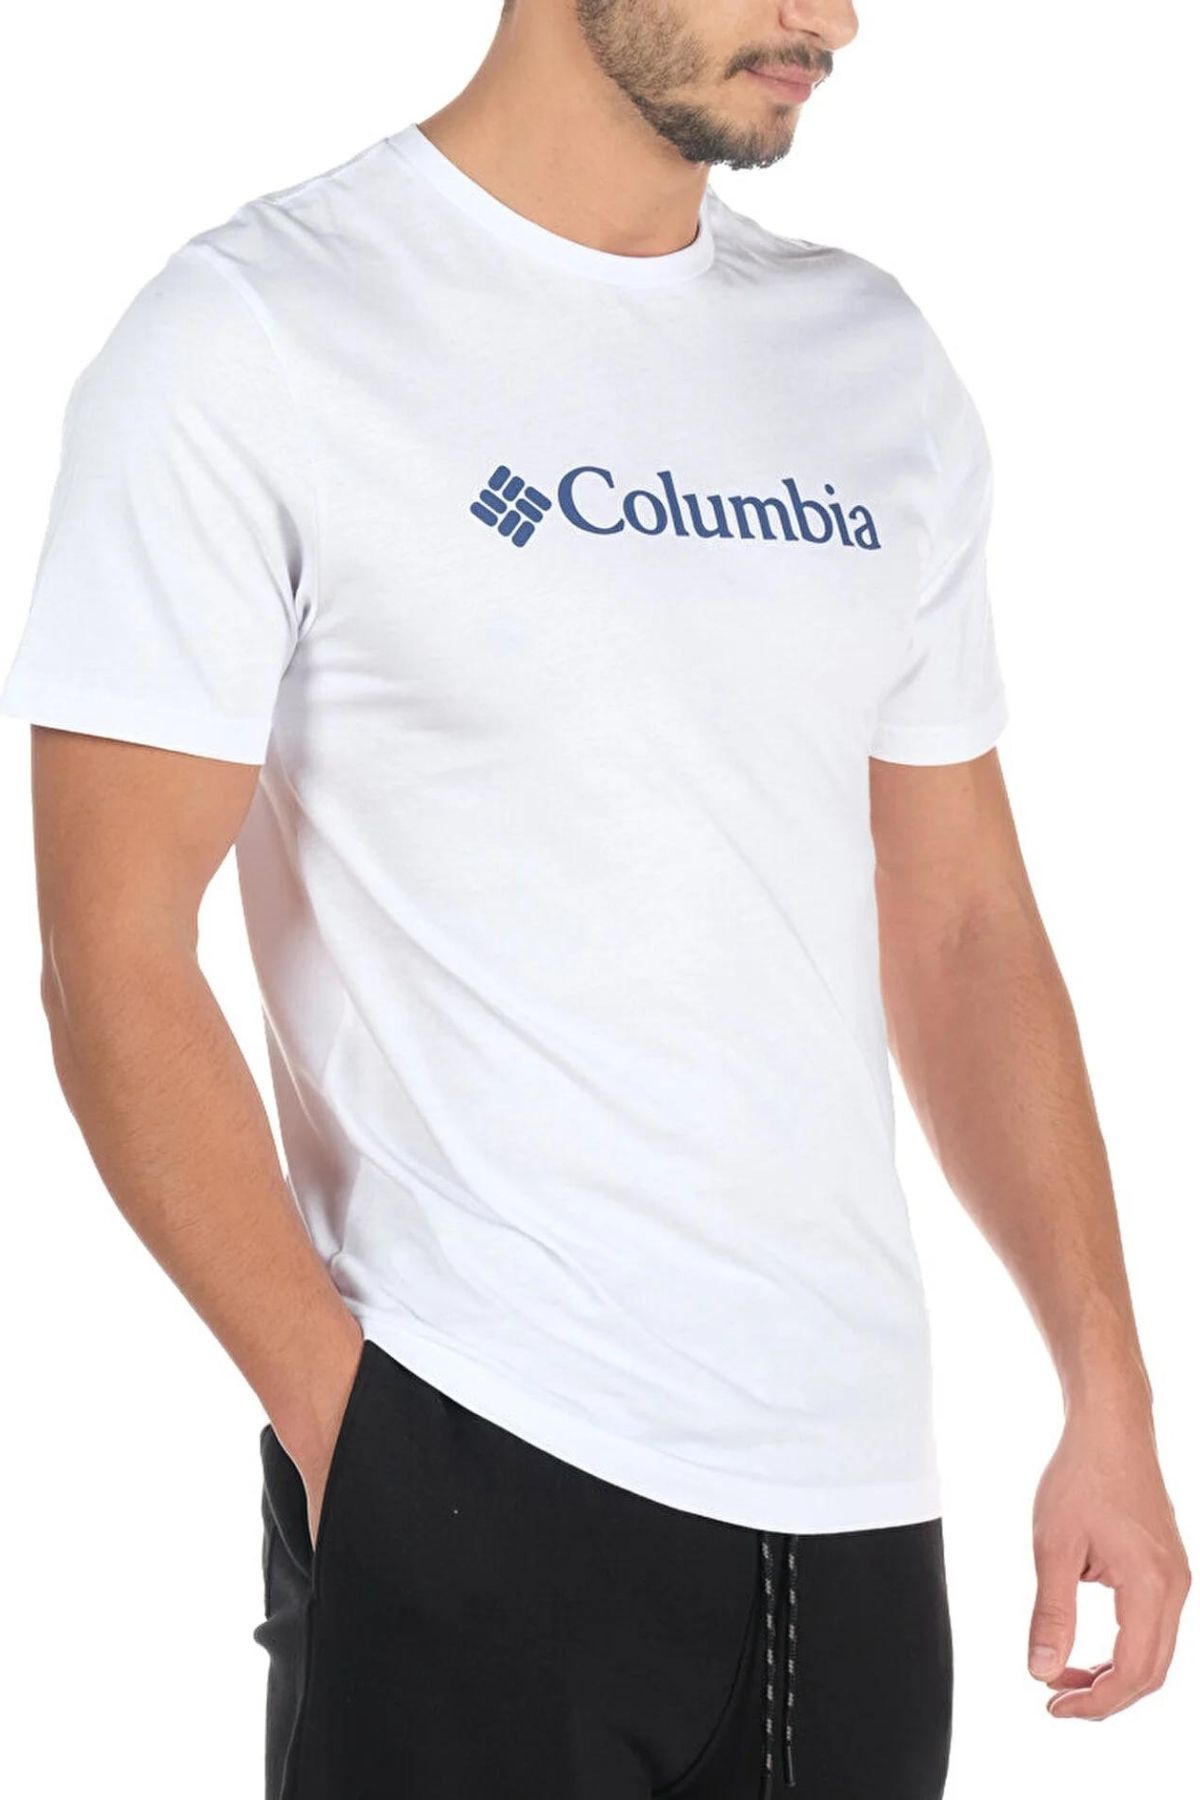 Columbia Erkek Beyaz T-shirt 1680050100-100